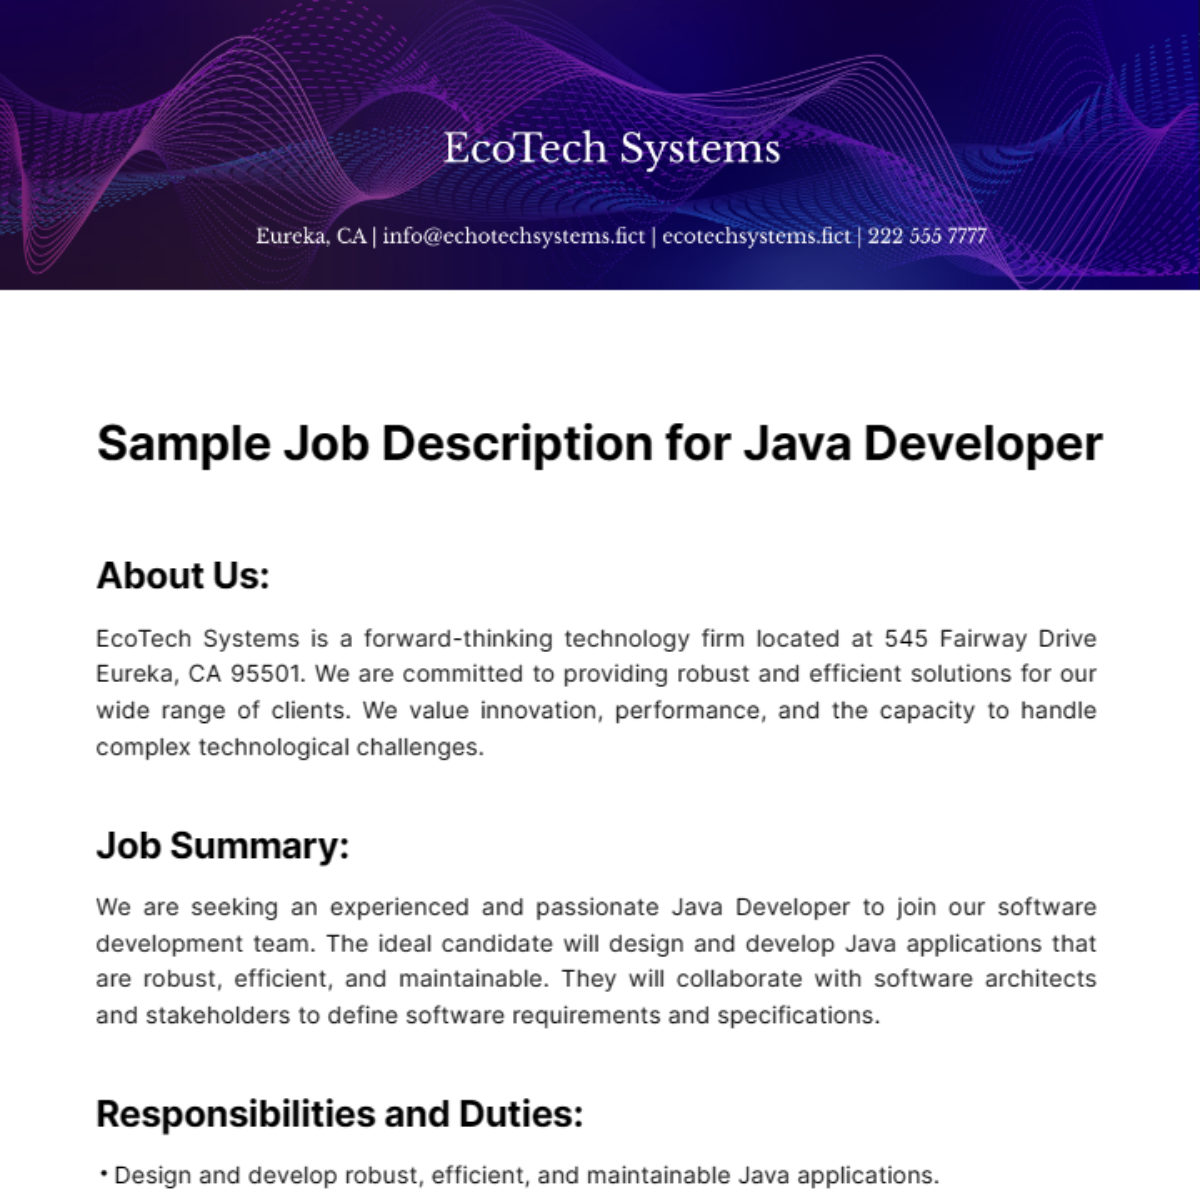 Sample Job Description for Java Developer Template